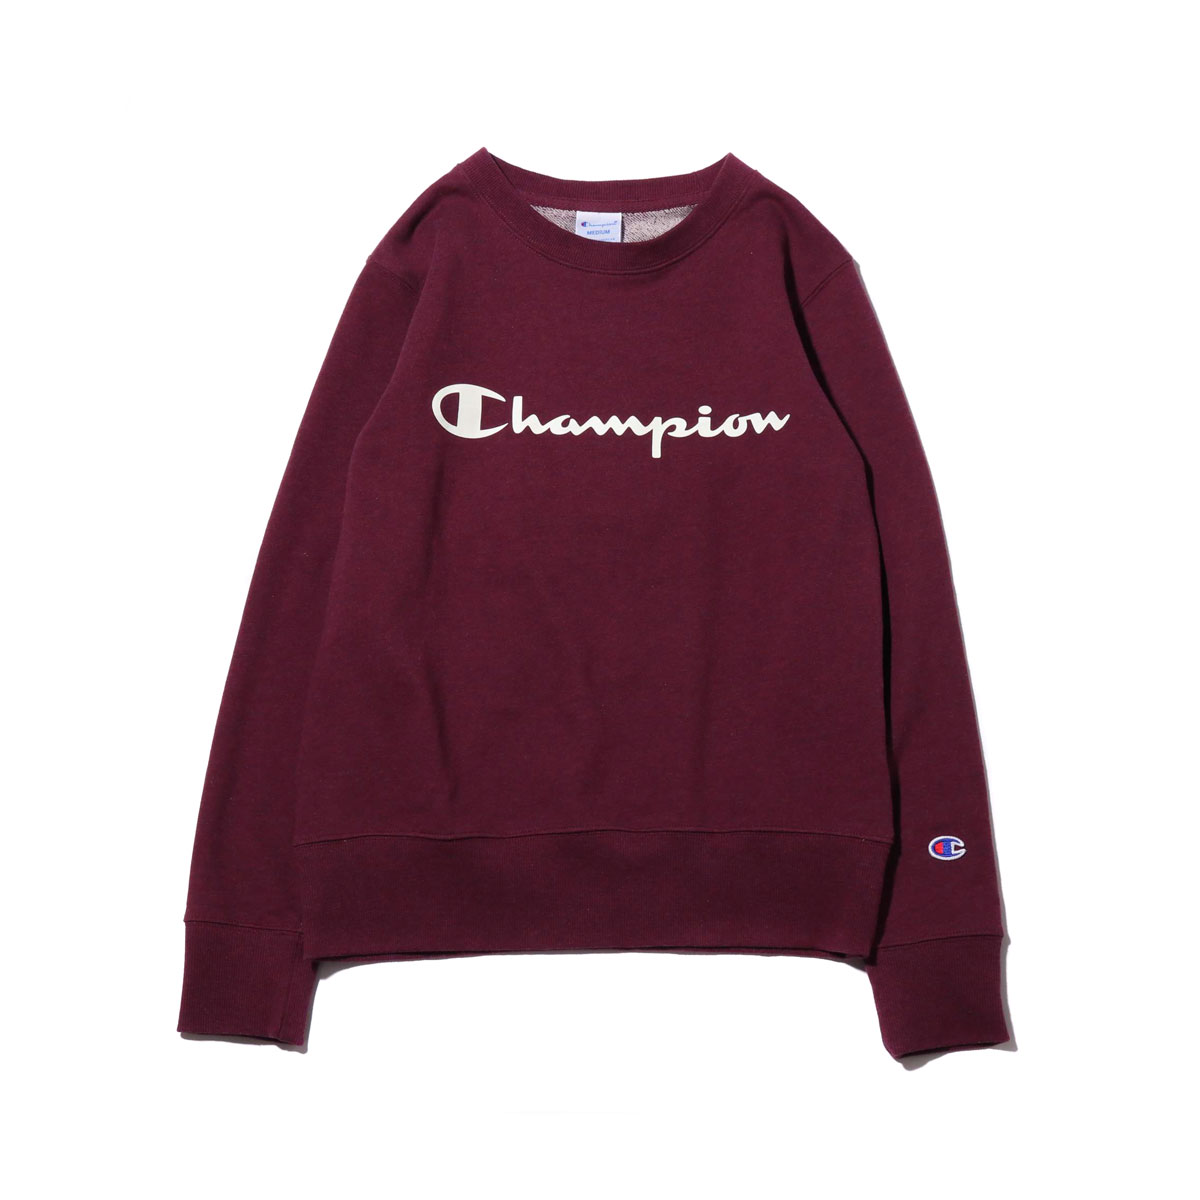 burgundy champion sweater